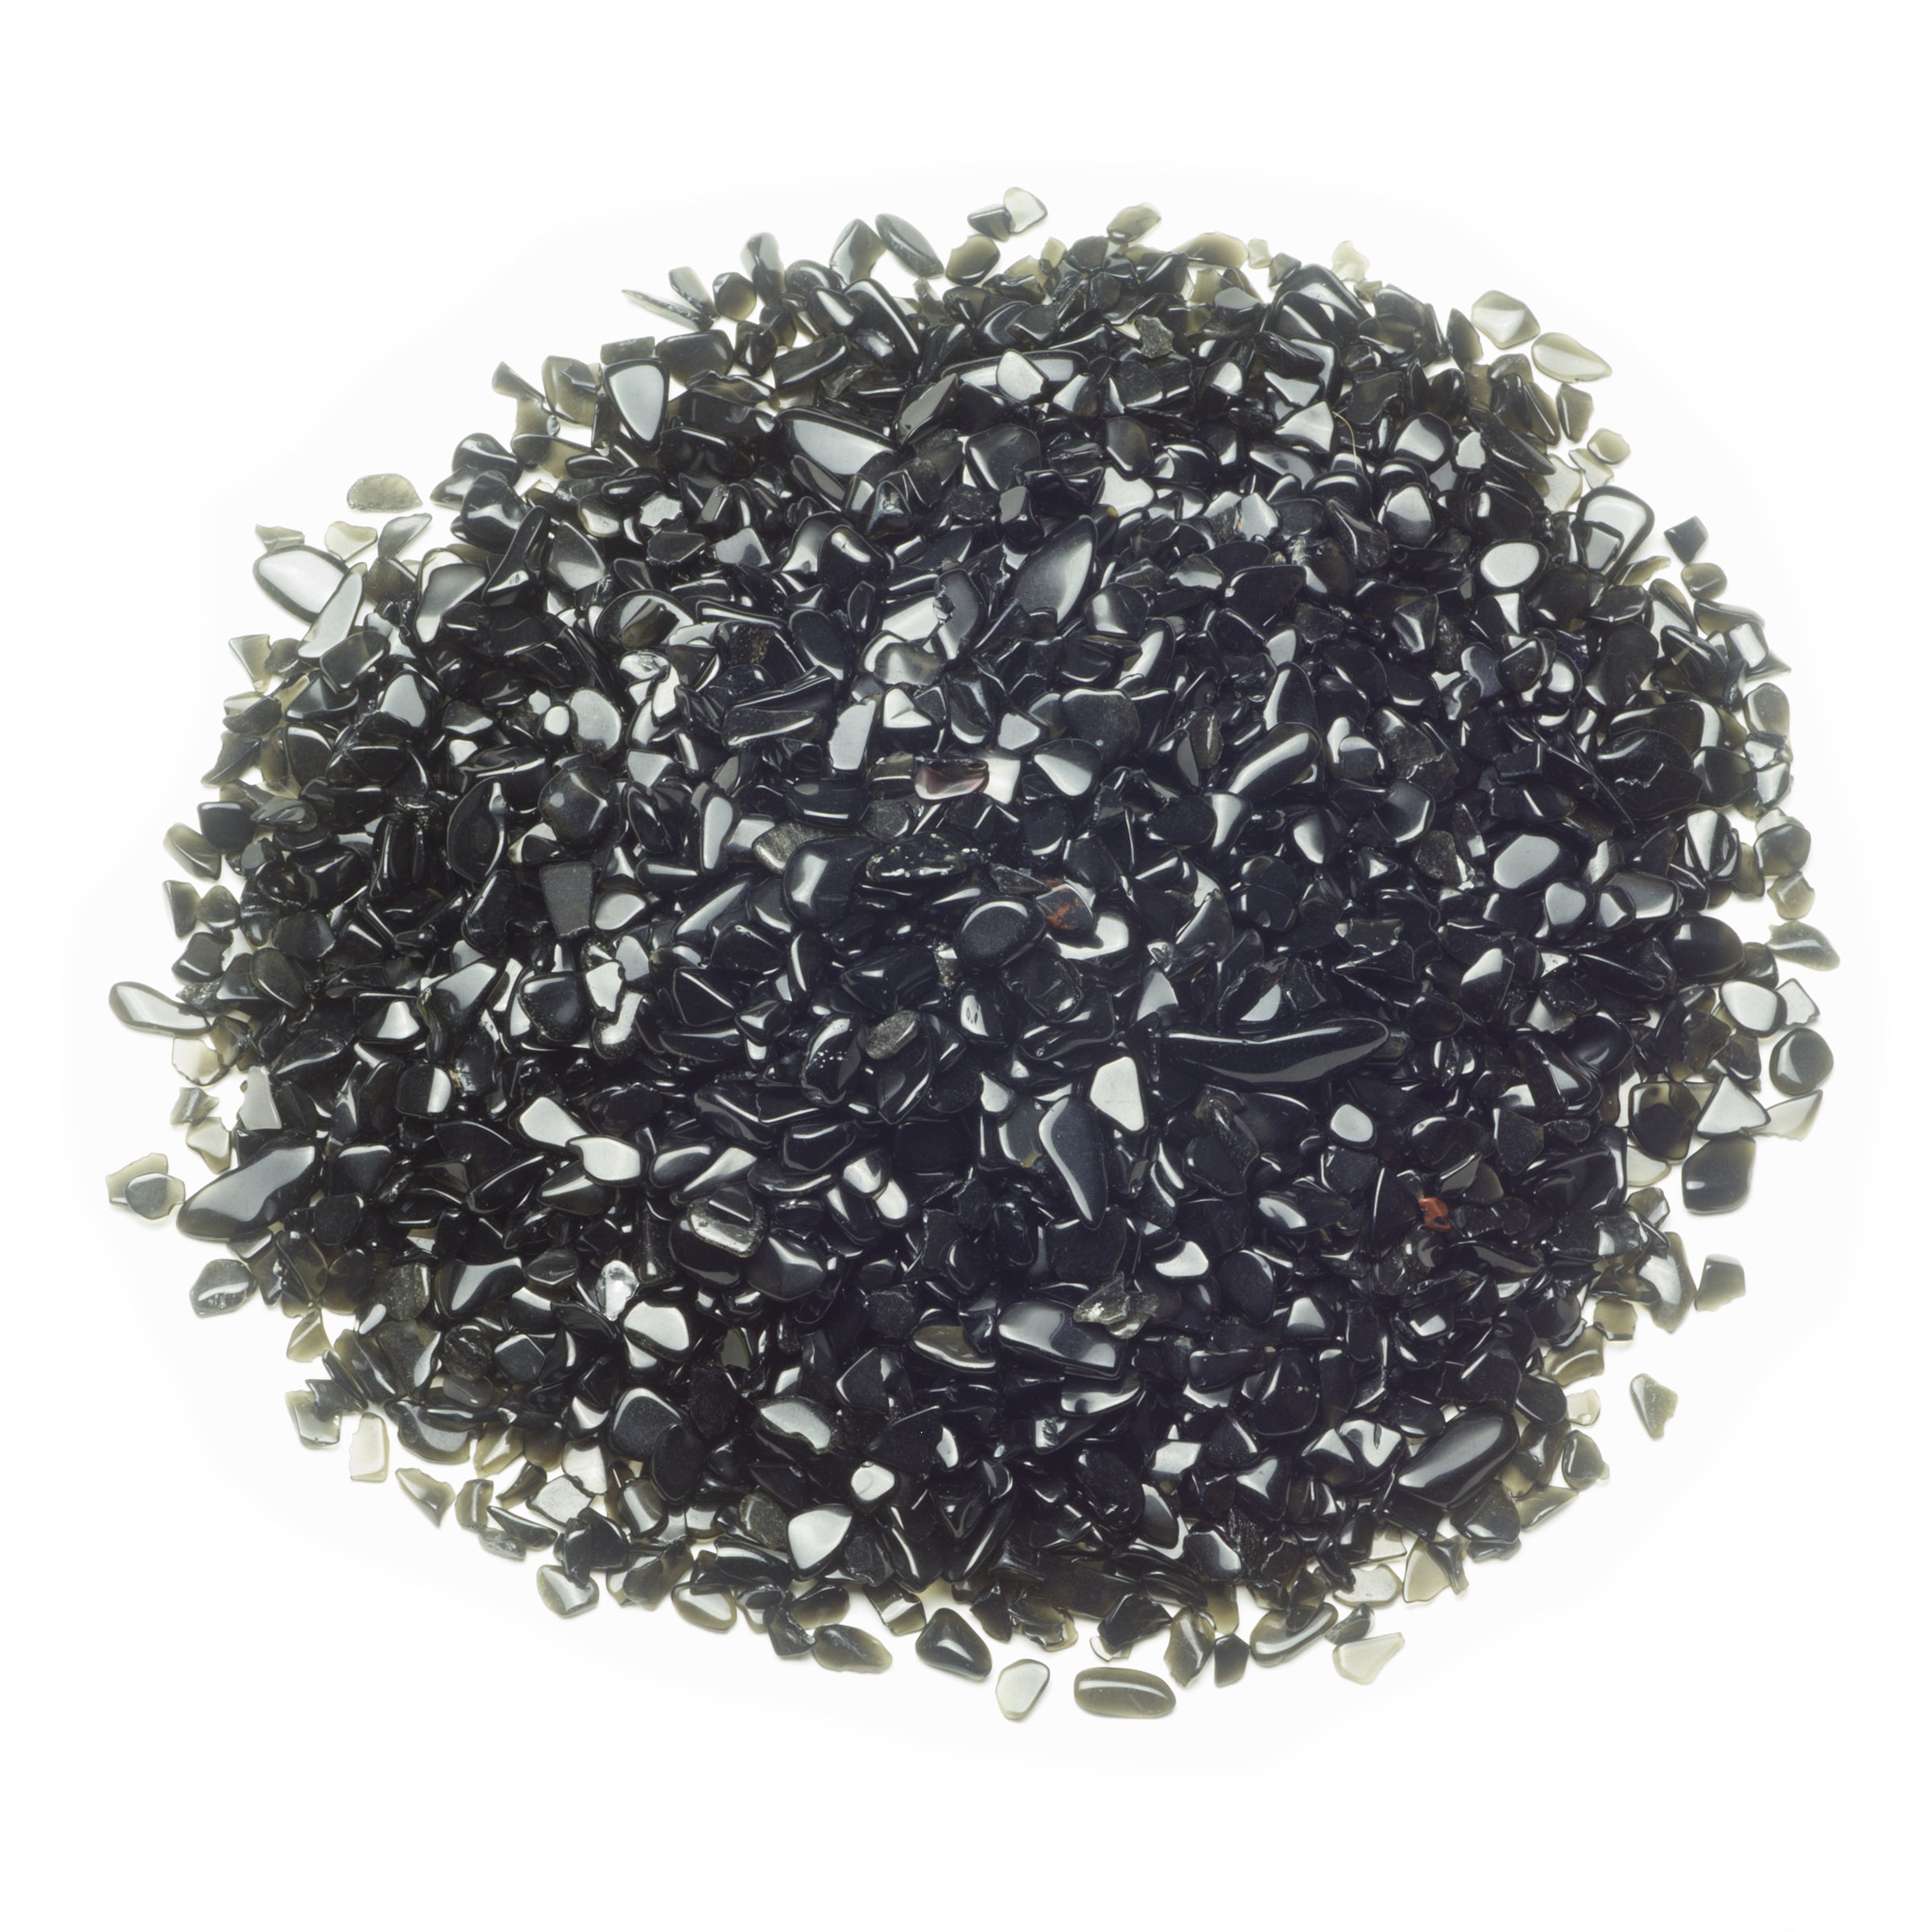 Polished Gemstone Chips | 1/2 Pound (Black Obsidian)